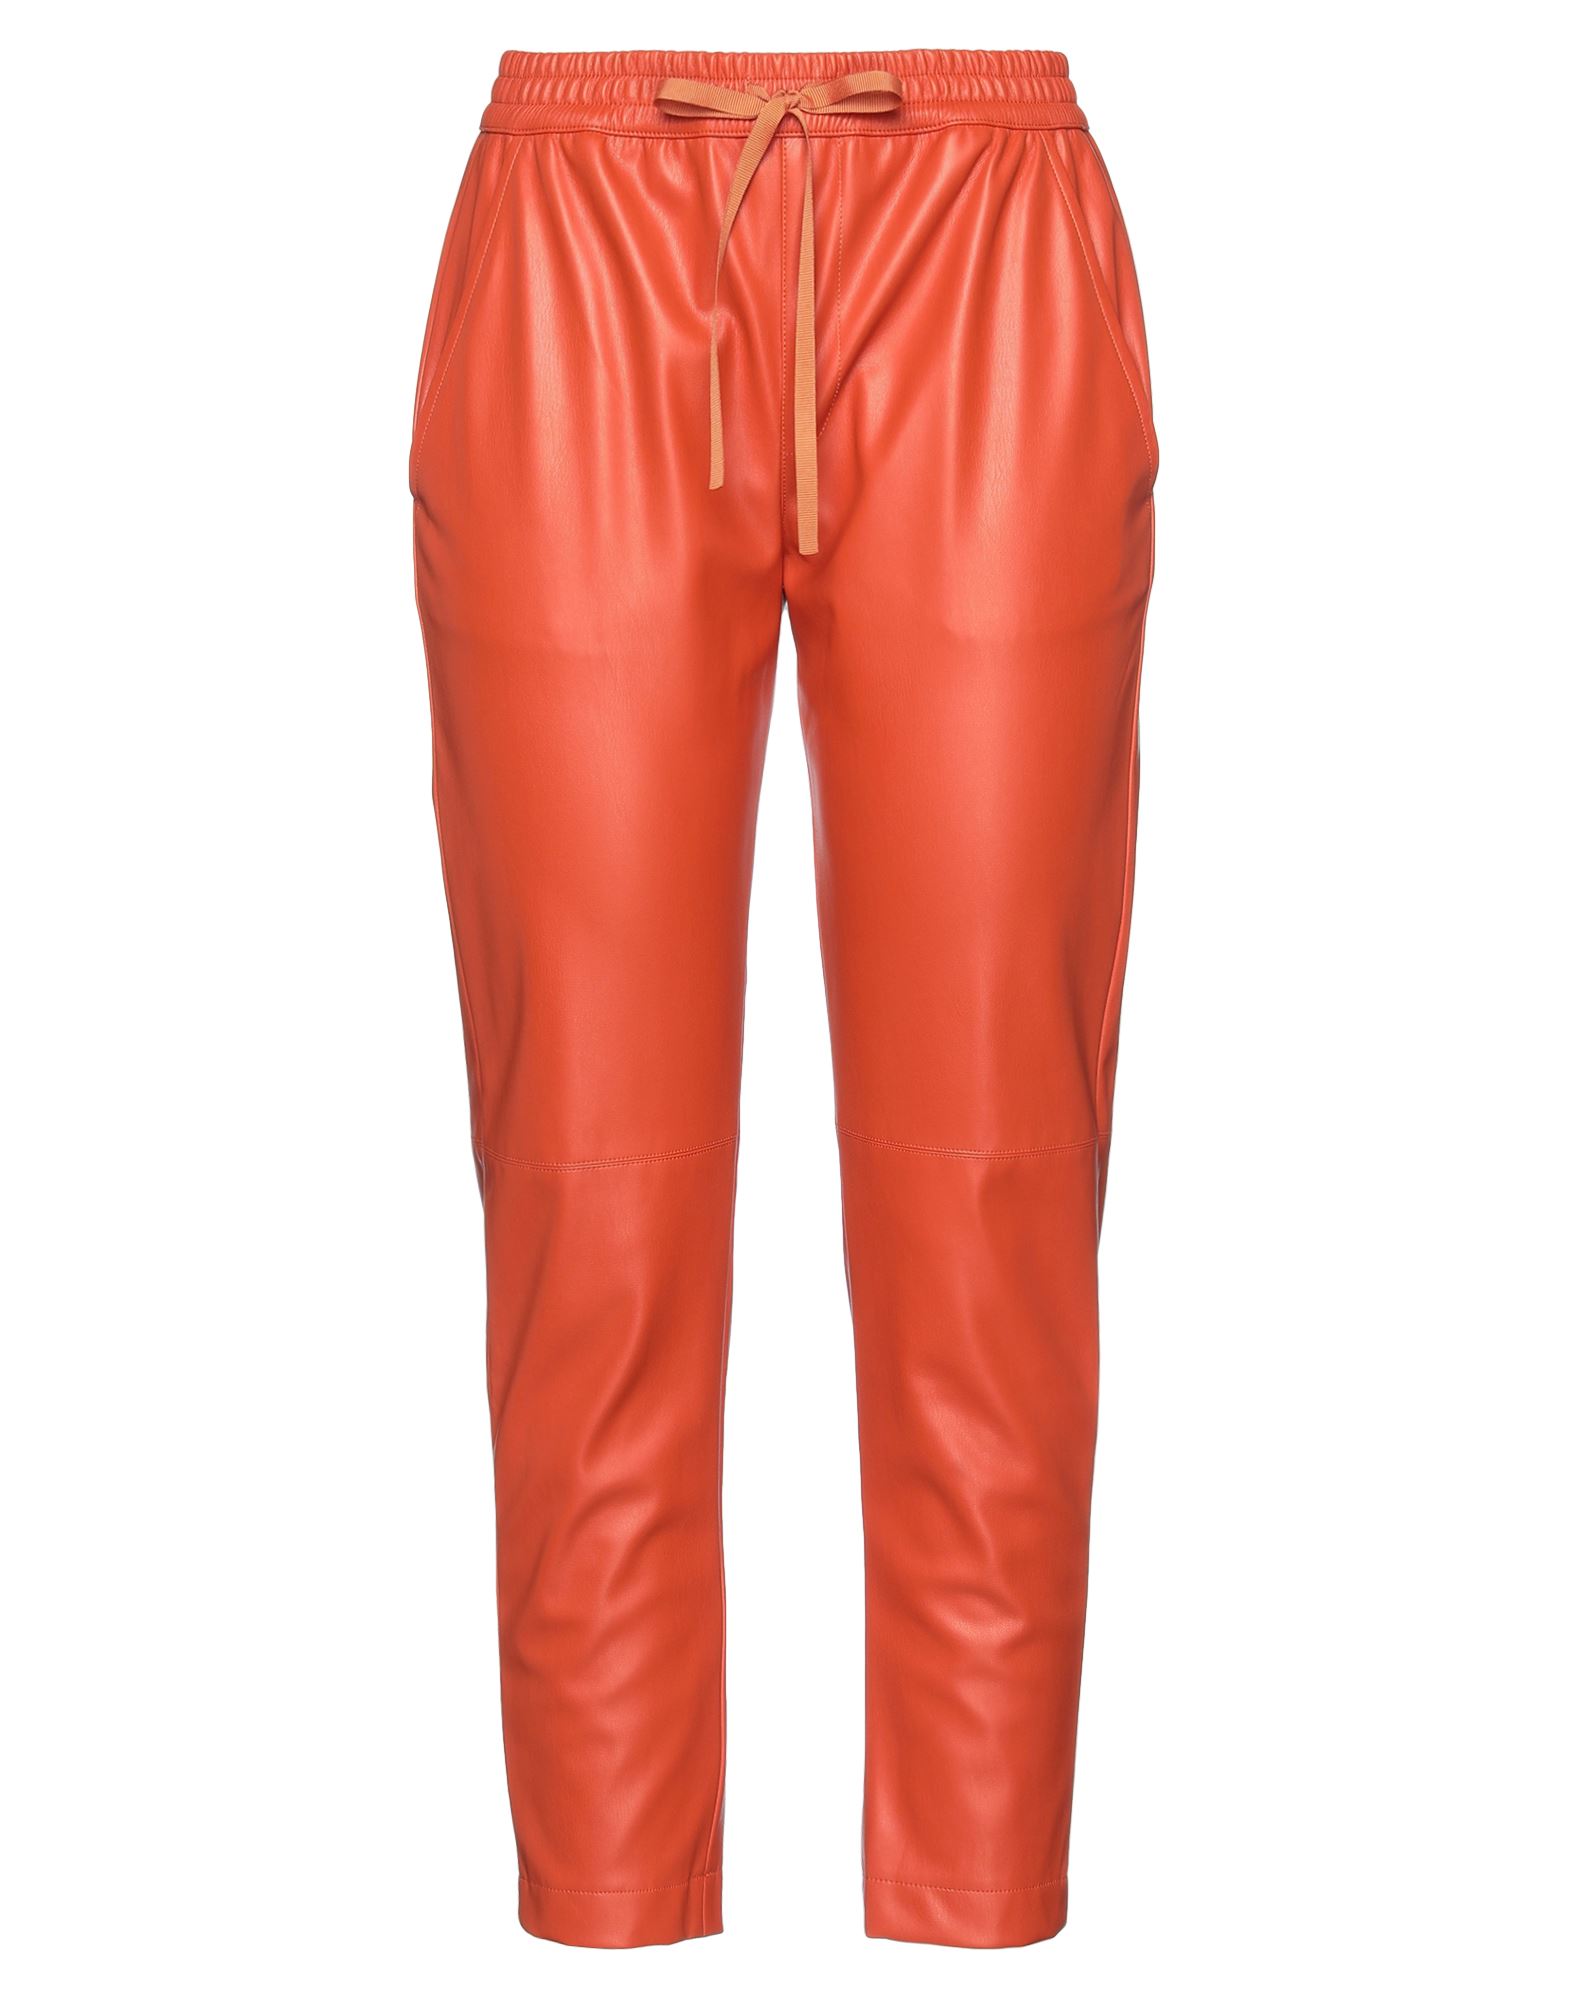 Semicouture Pants In Orange